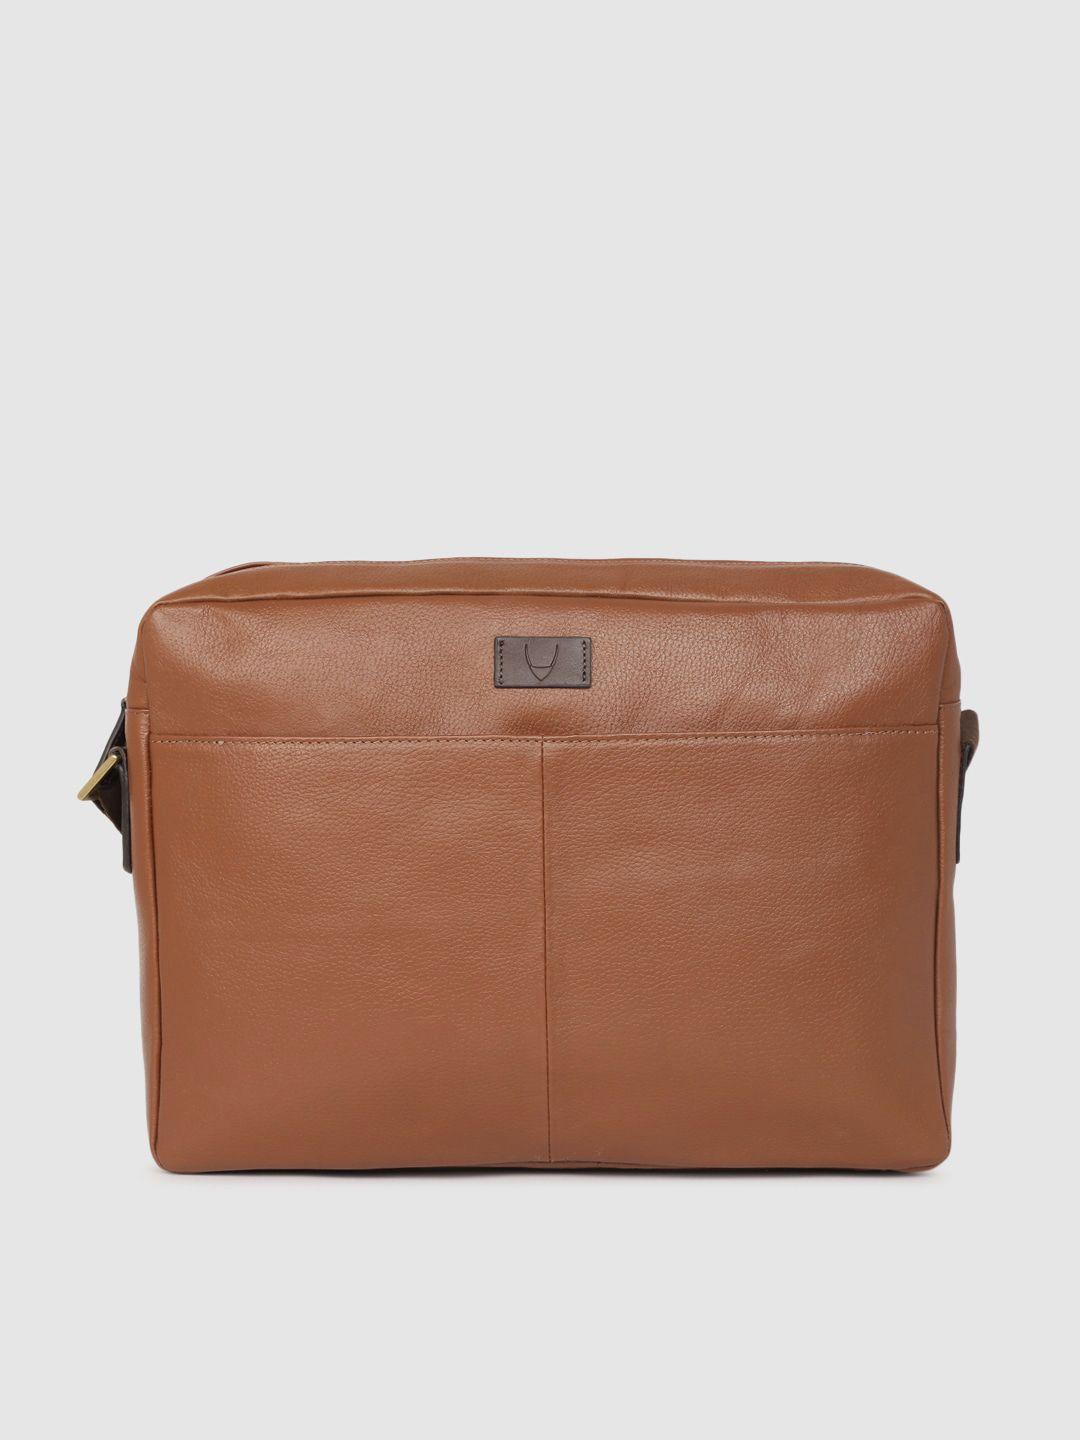 hidesign men tan brown solid leather laptop bag